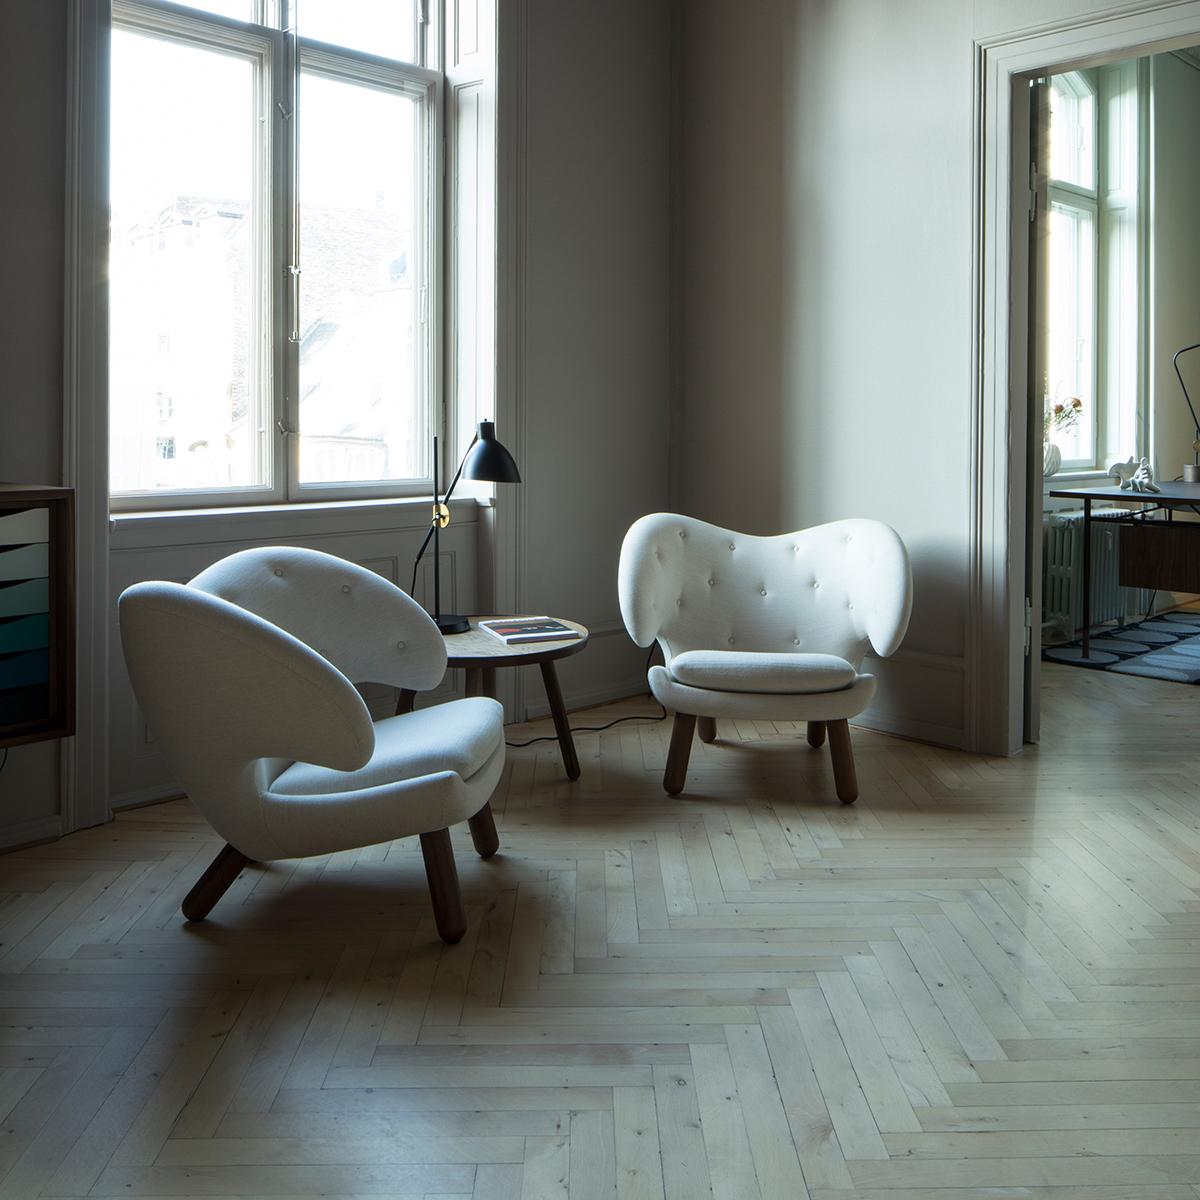 Set of Two Pelican Chairs in Garnet Kvadrat Remix and Wood by Finn Juhl 6